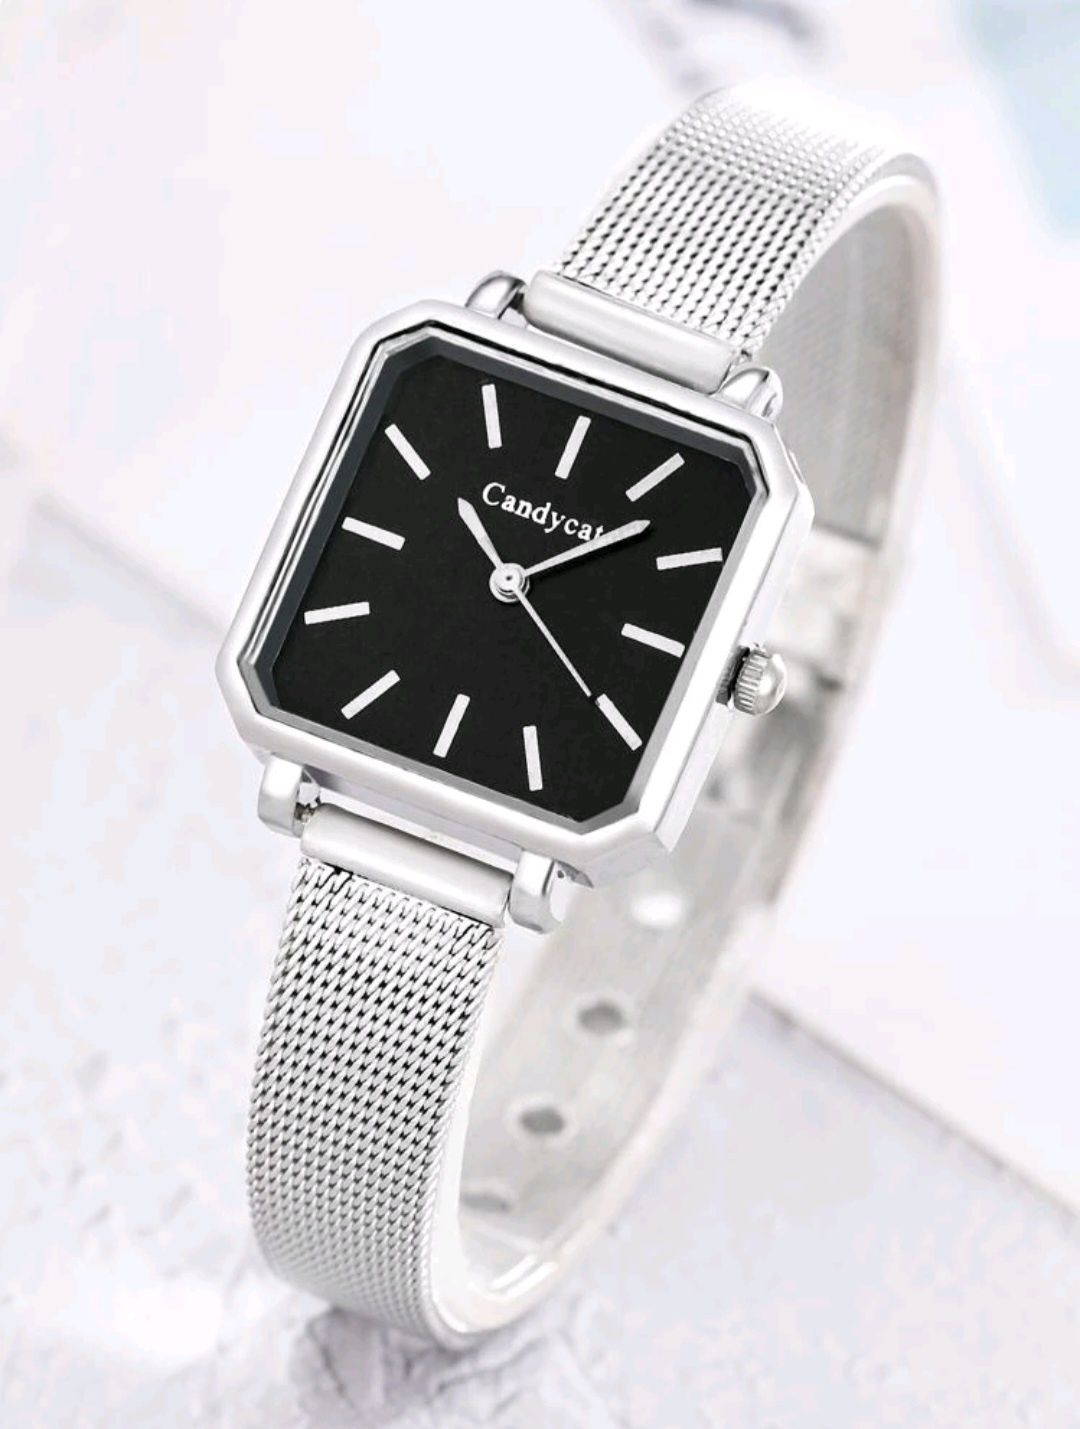 Damski zegarek na srebrnym pasku z siateczki